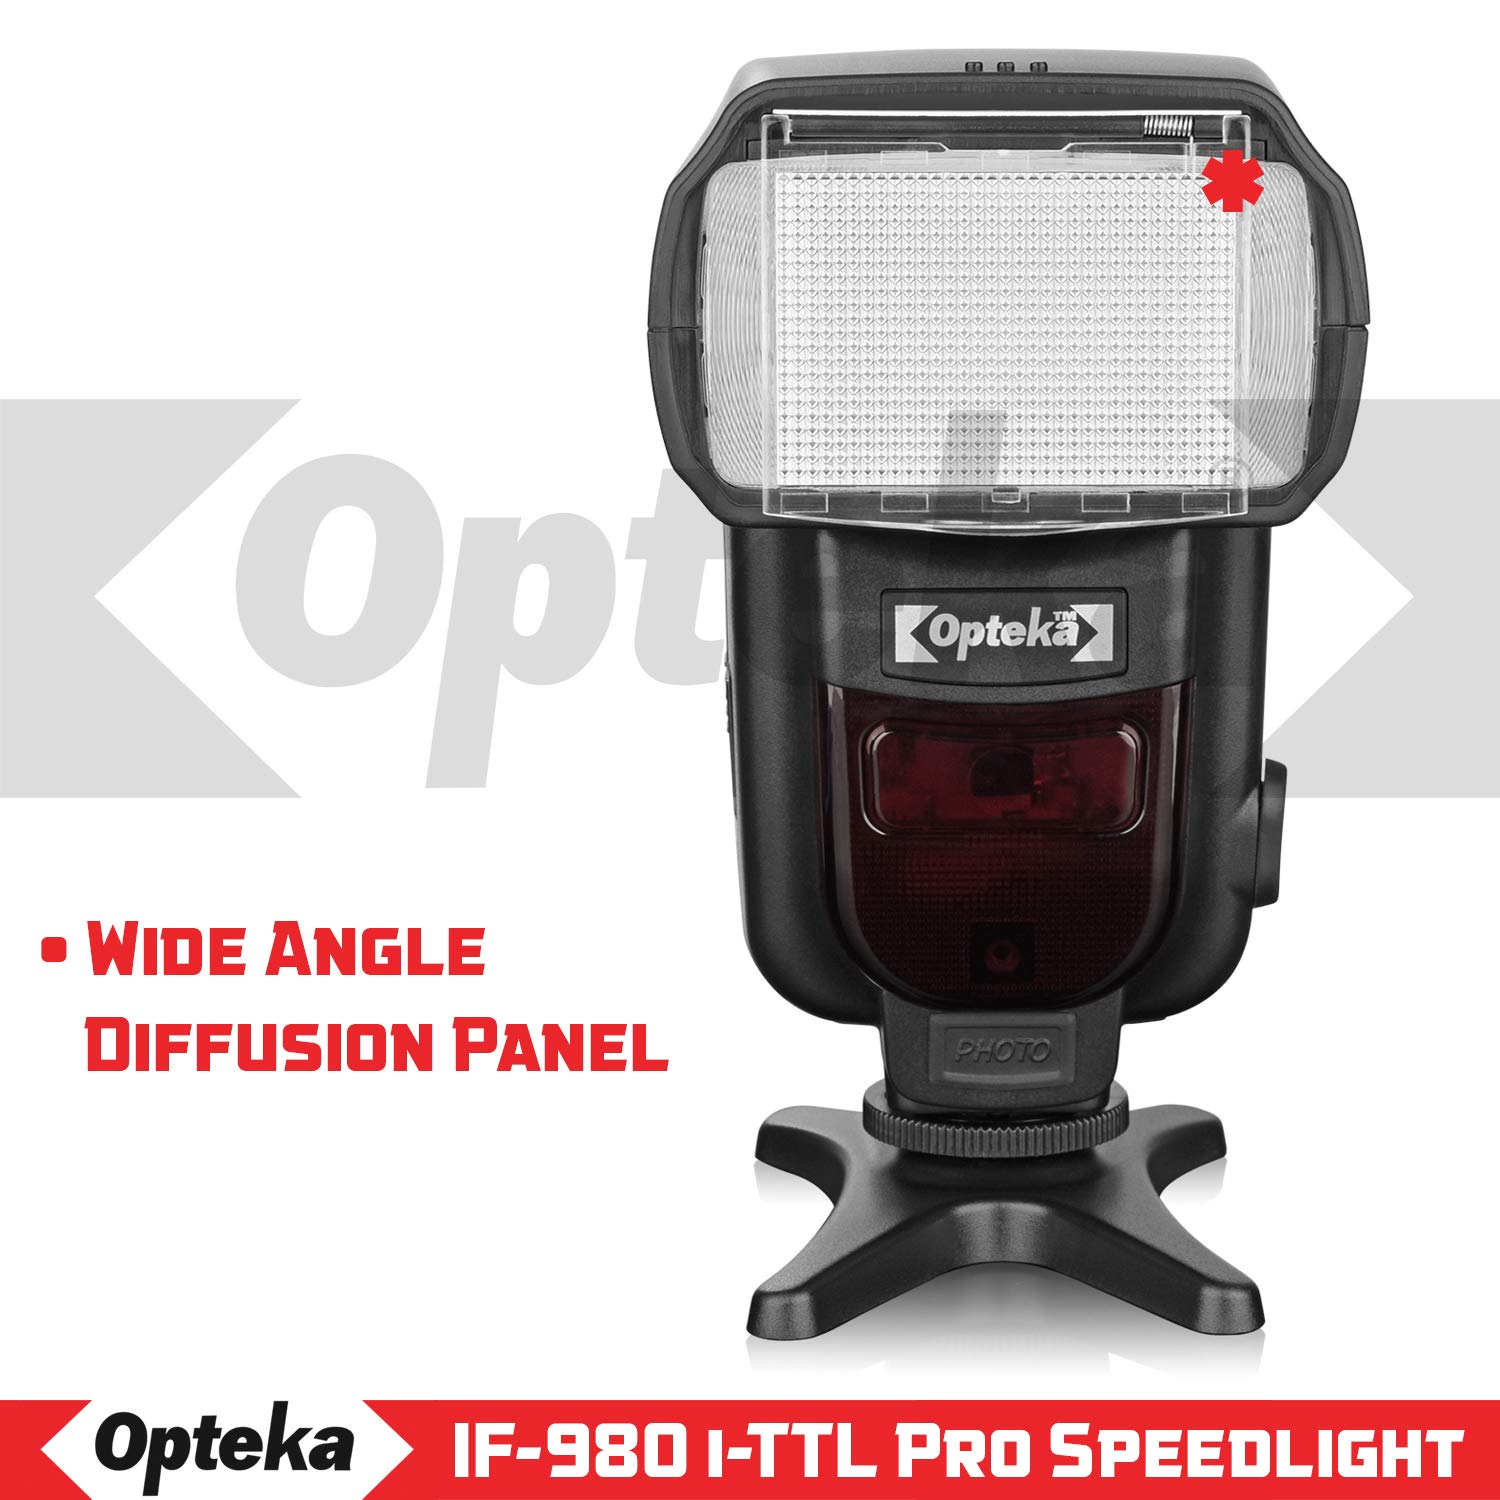 Opteka IF-980 i-TTL Dedicated Auto-Focus Speedlight Flash with LCD Display for Nikon Z50, Z7, Z6, D6, D5, D4, D850, D810, D780, D750, D610, D500, D7500, D7200, D5600, D5500, D5300, D3500, D3400, D3300